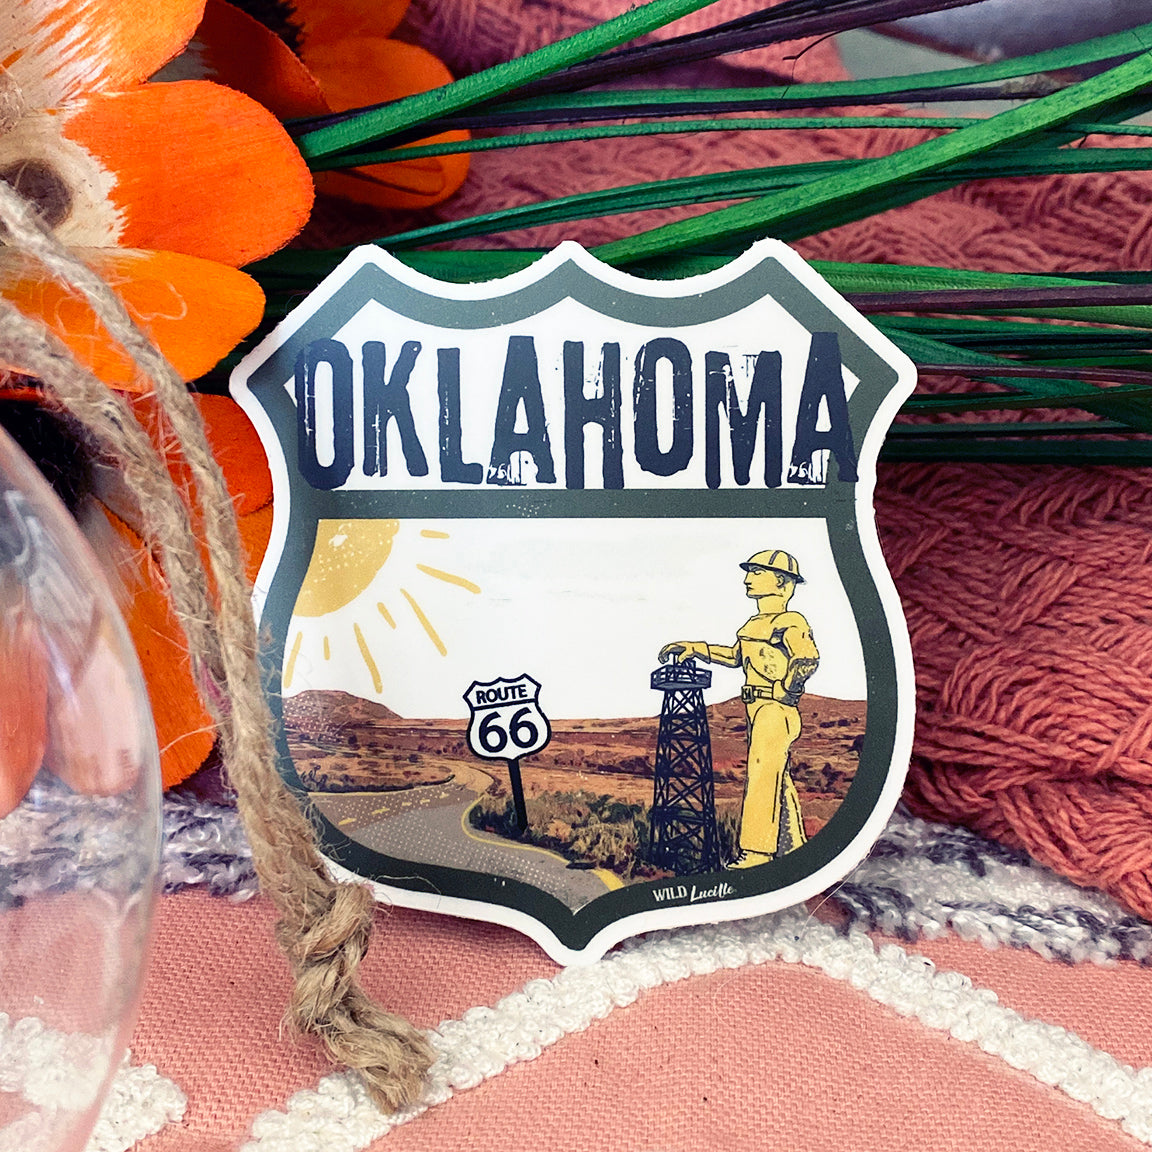 Destination Oklahoma - Vinyl Souvenir Sticker Decals